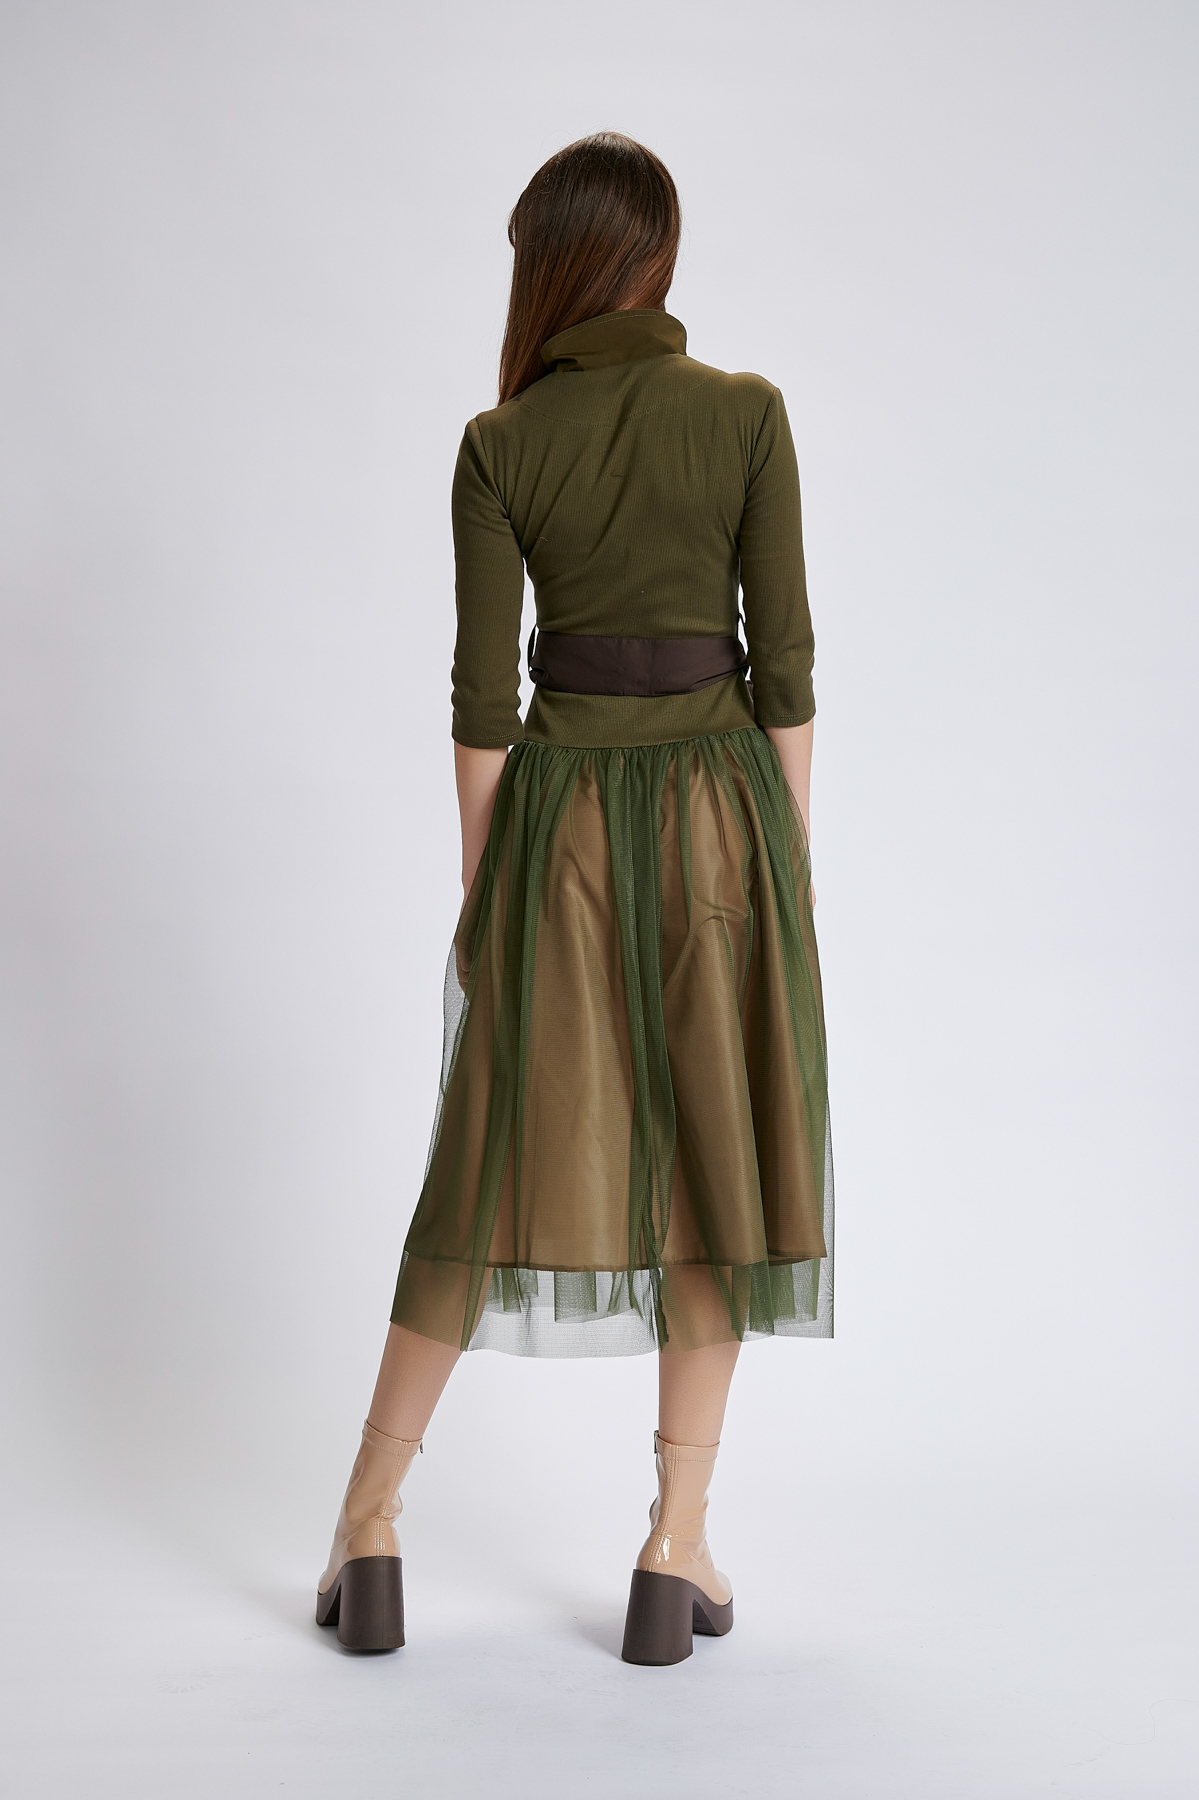 Dress MIRANDA 22 K. Natural fabrics, original design, handmade embroidery